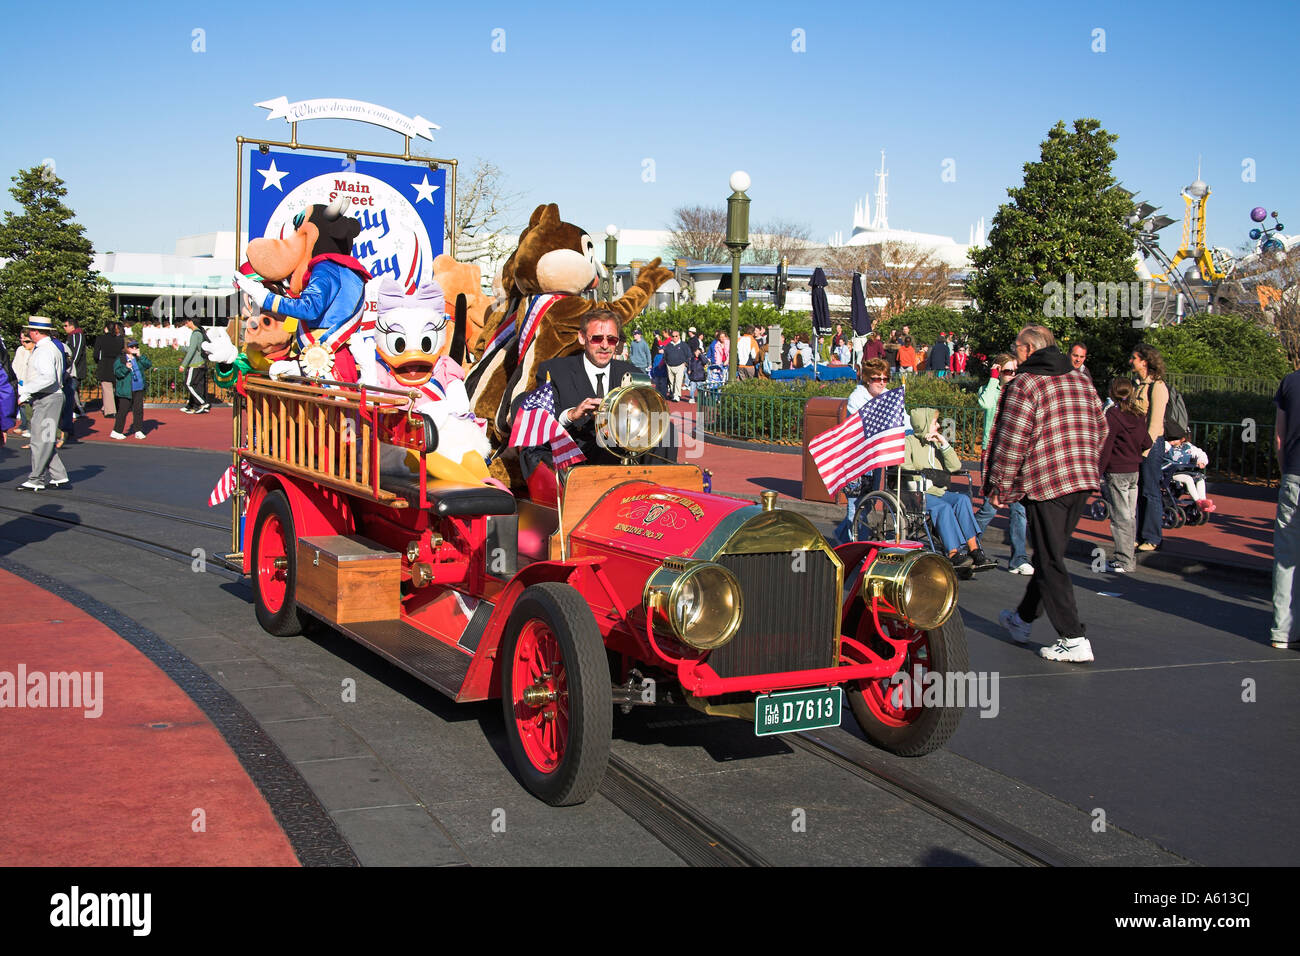 Fire tender and Disney characters, Main Street Family Fun Day Parade, Magic Kingdom, Disney World, Orlando, Florida, USA Stock Photo